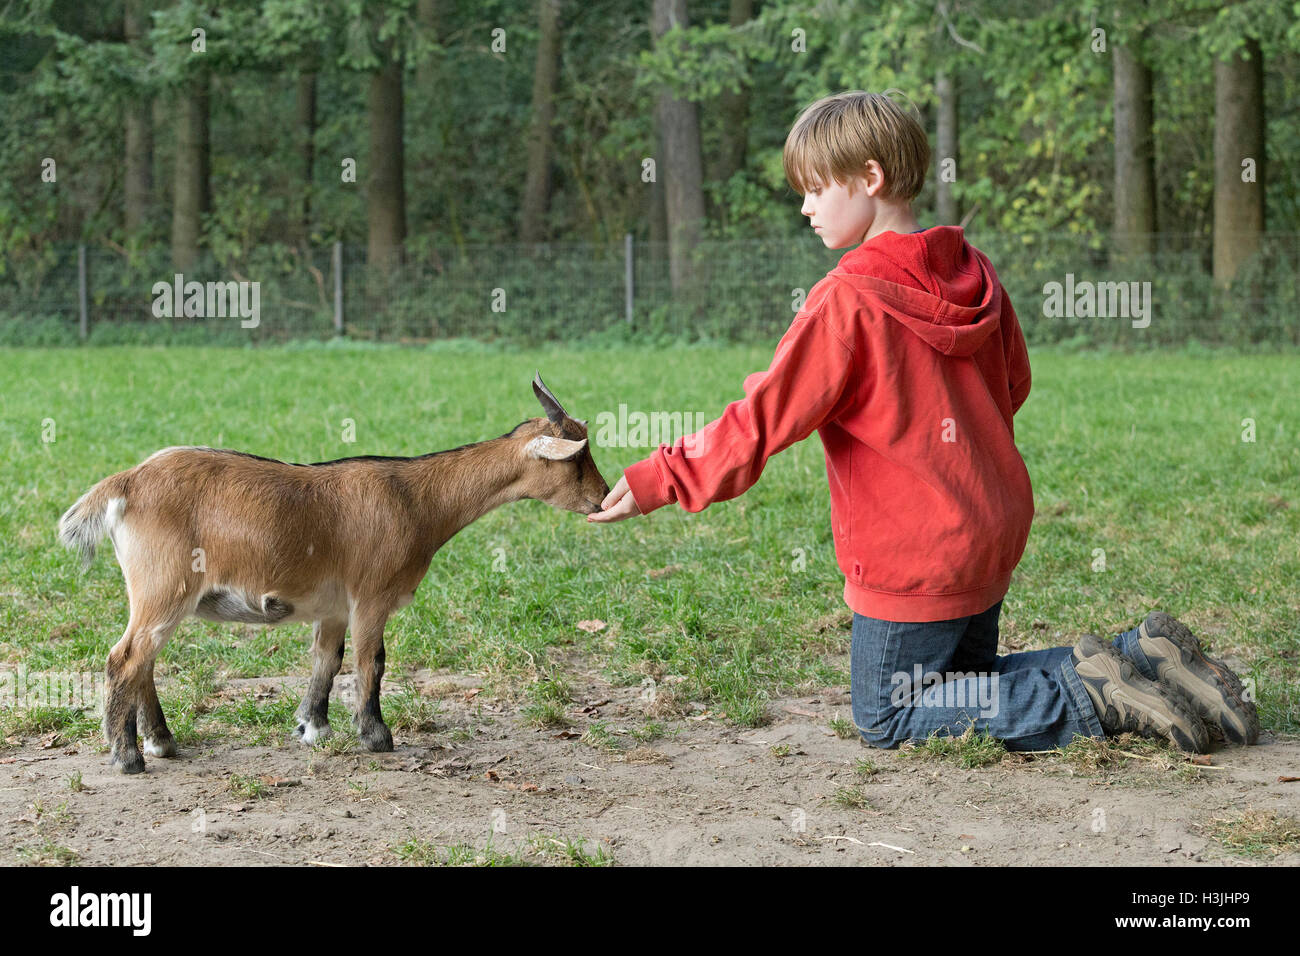 Donner une chèvre garçon traiter, Wildpark Schwarze Berge, Basse-Saxe, Allemagne Banque D'Images